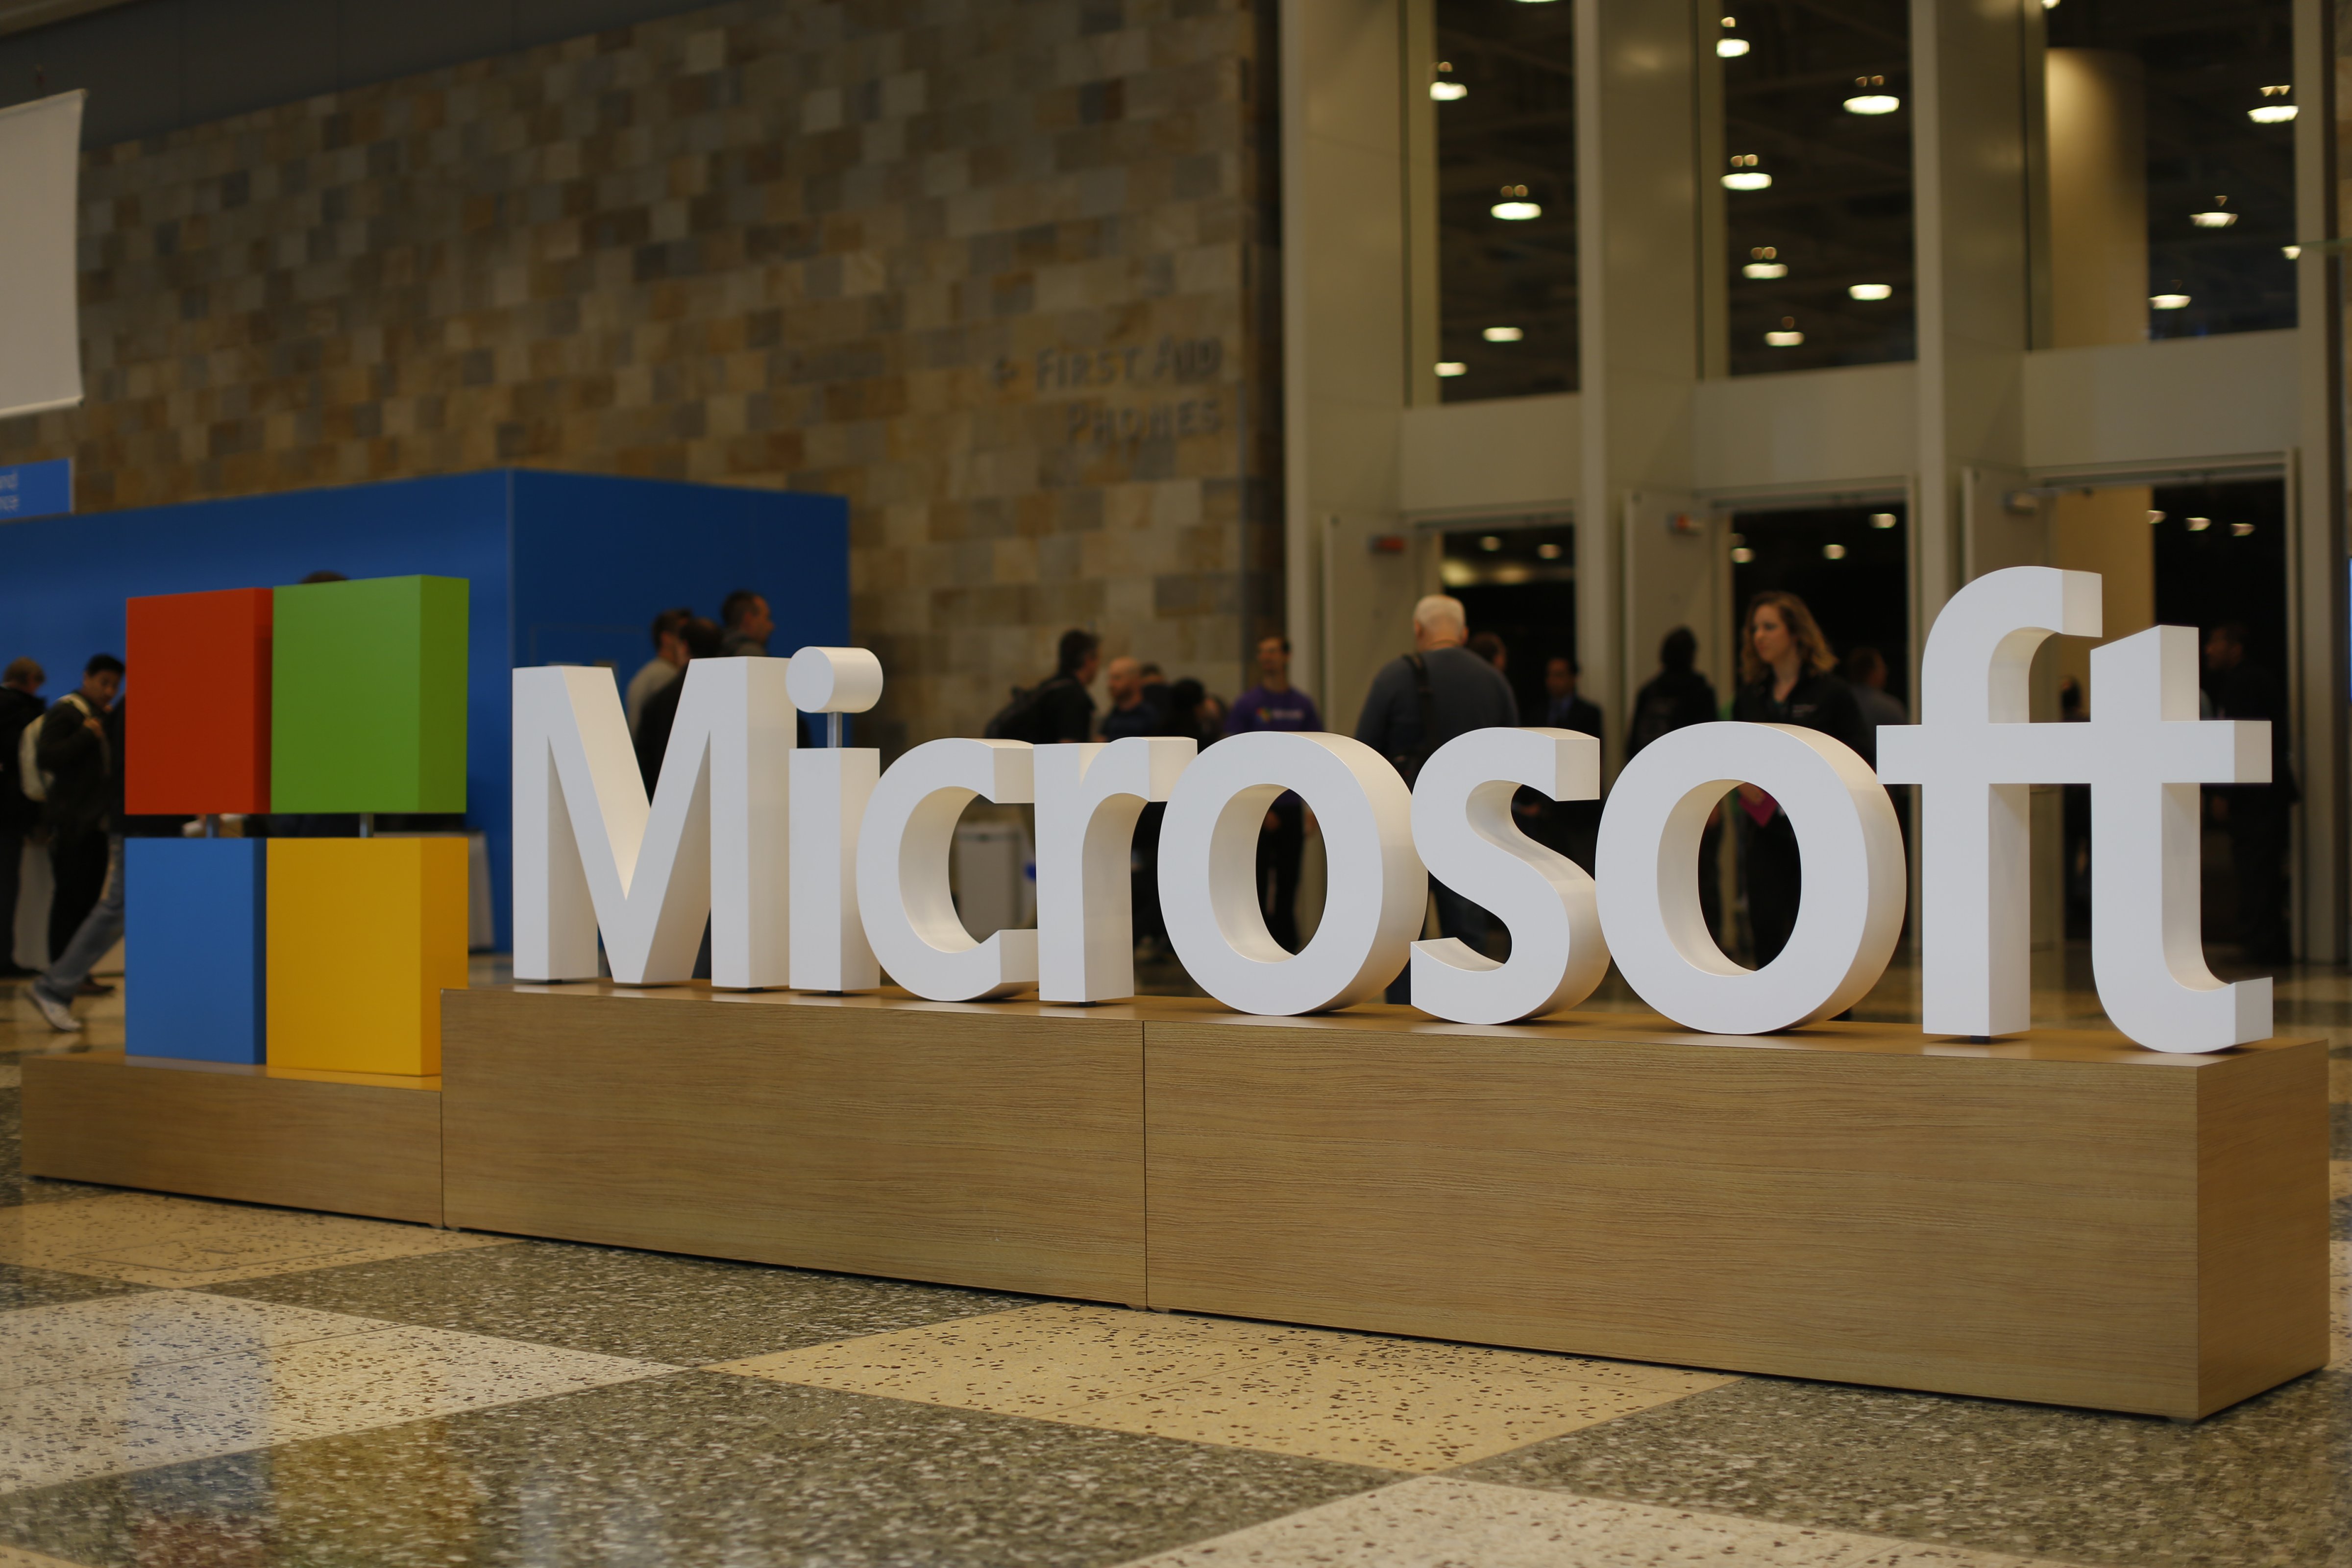 The Microsoft logo. (Stephen Lam&mdash;Getty Images)